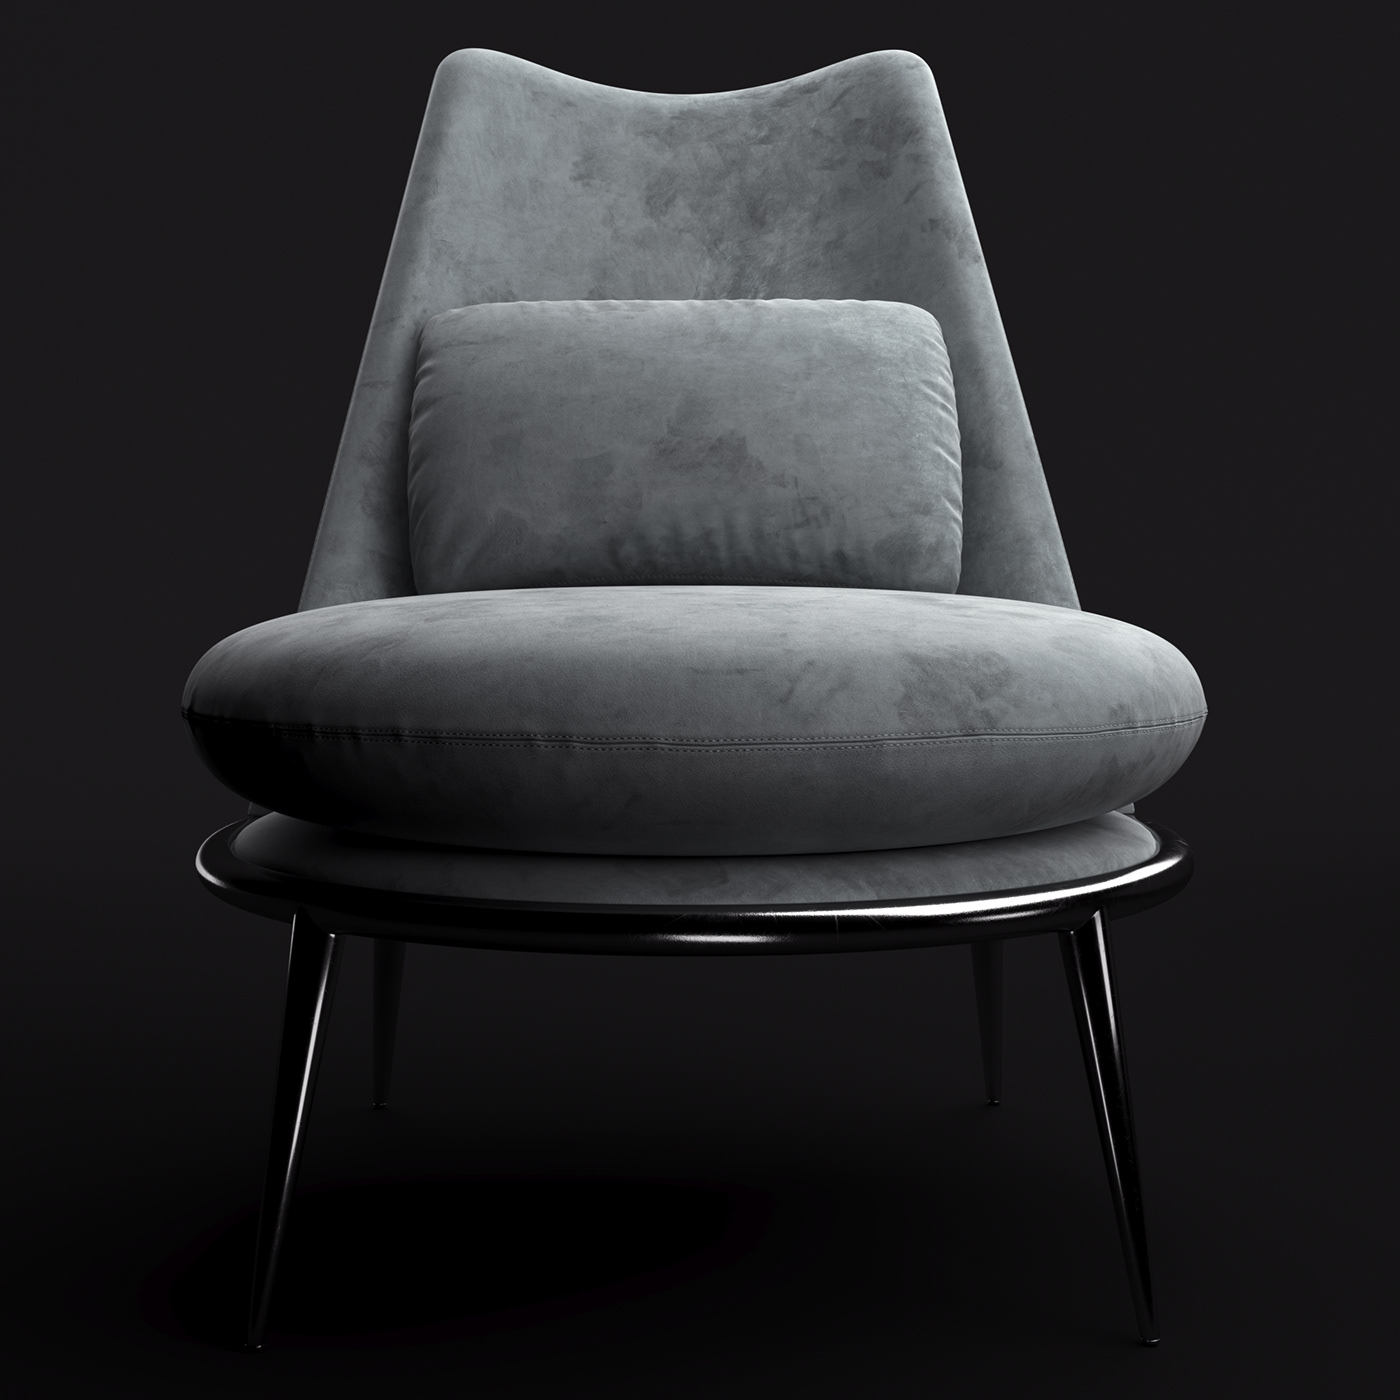 3d furniture 3D model 3d modeling 3ds max 3д моделирование armchair armCHAIR 3D MODEl chair 3d model furniture design  interior design 